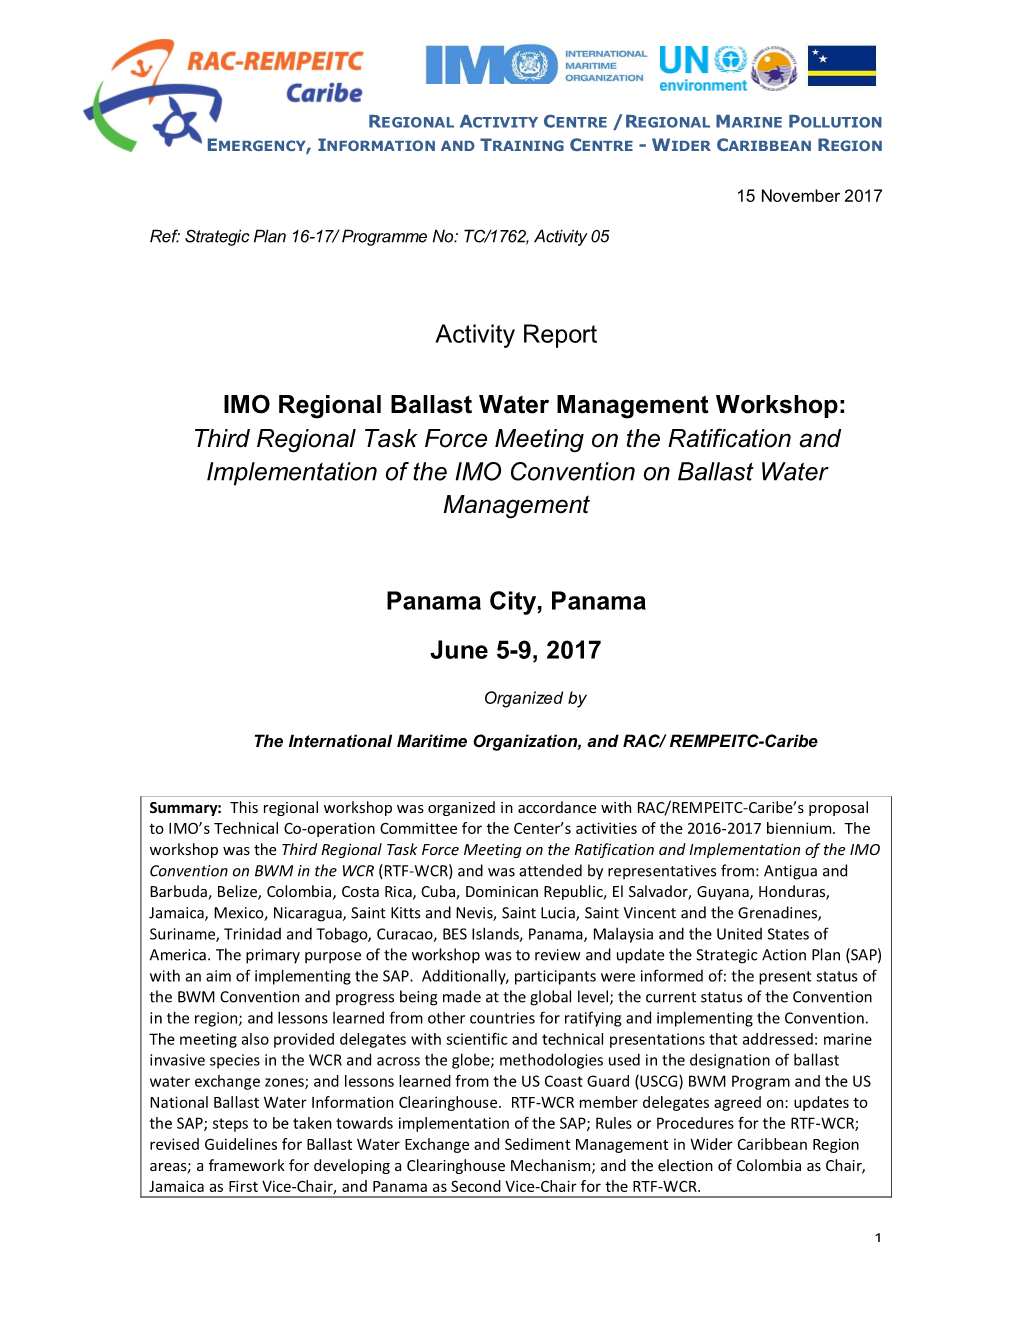 Activity Report IMO Regional Ballast Water Management Workshop